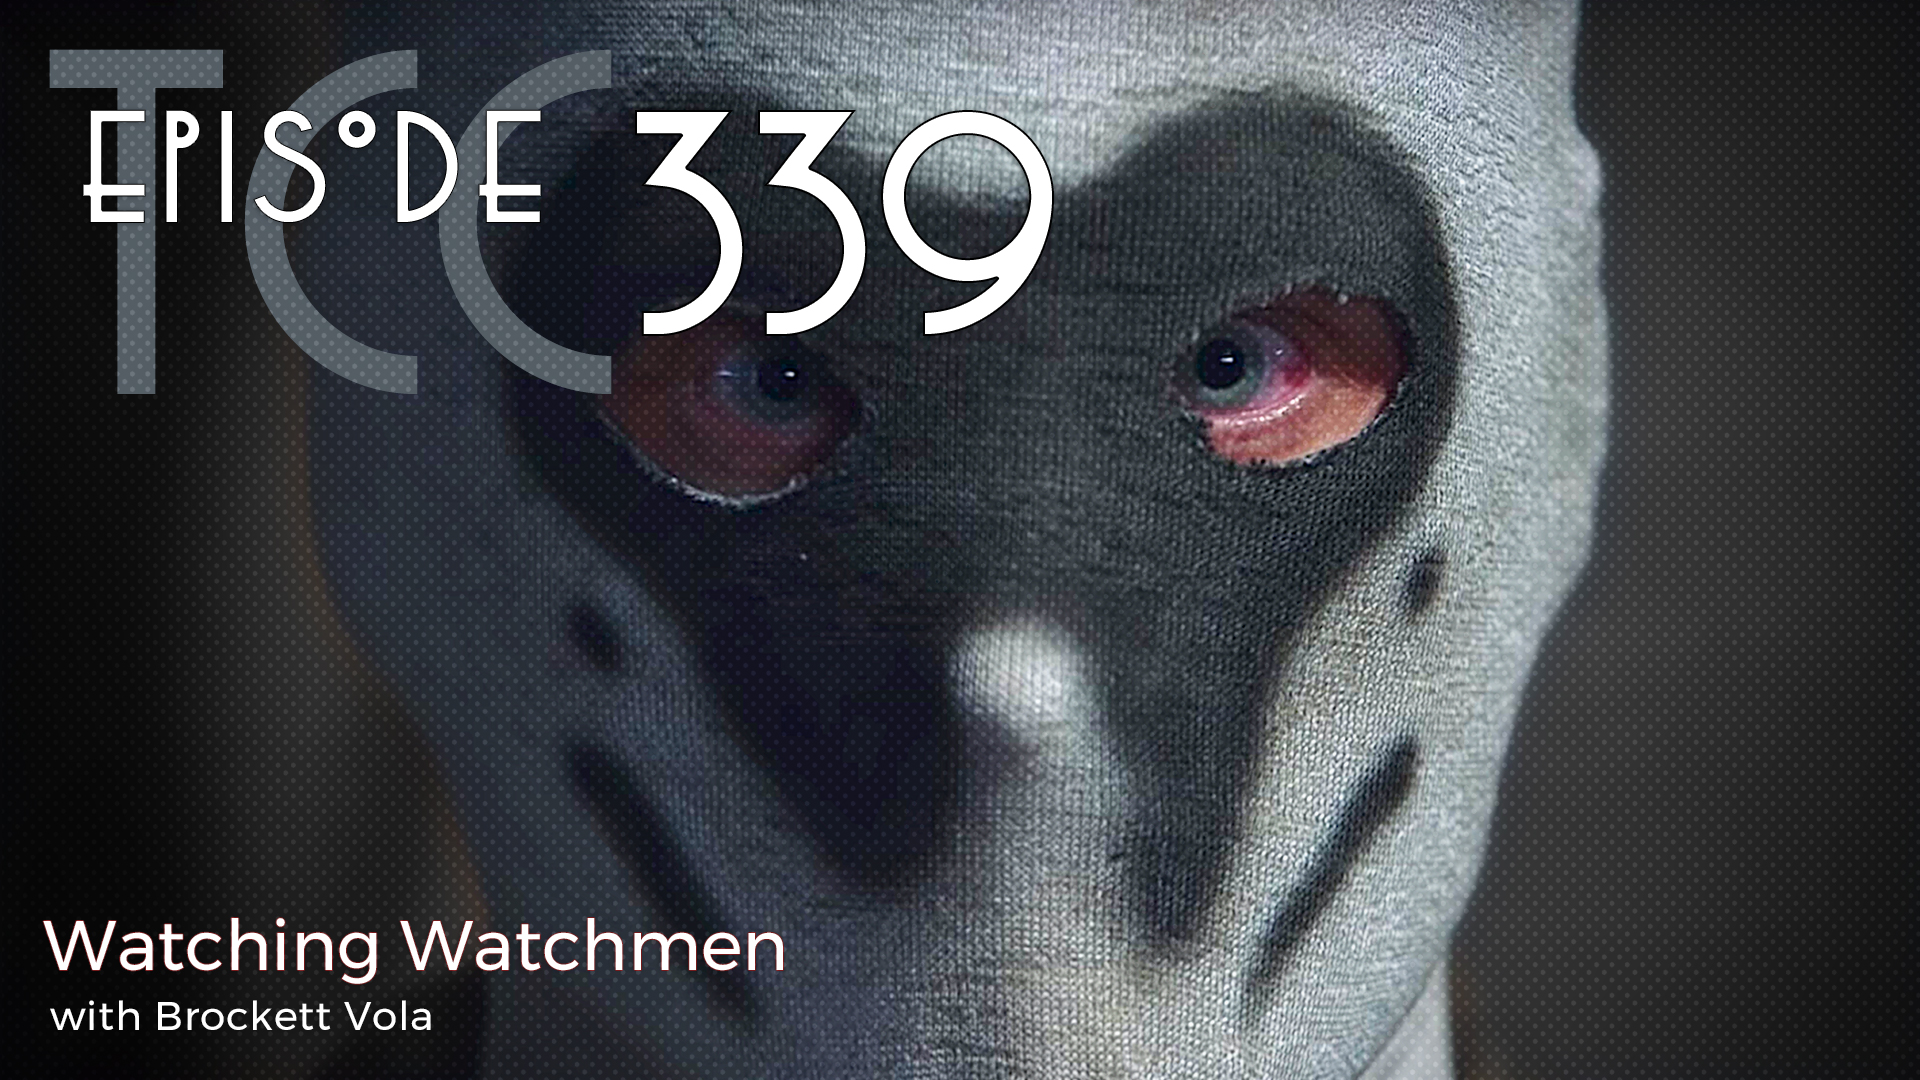 The Citadel Cafe 339: Watching Watchmen